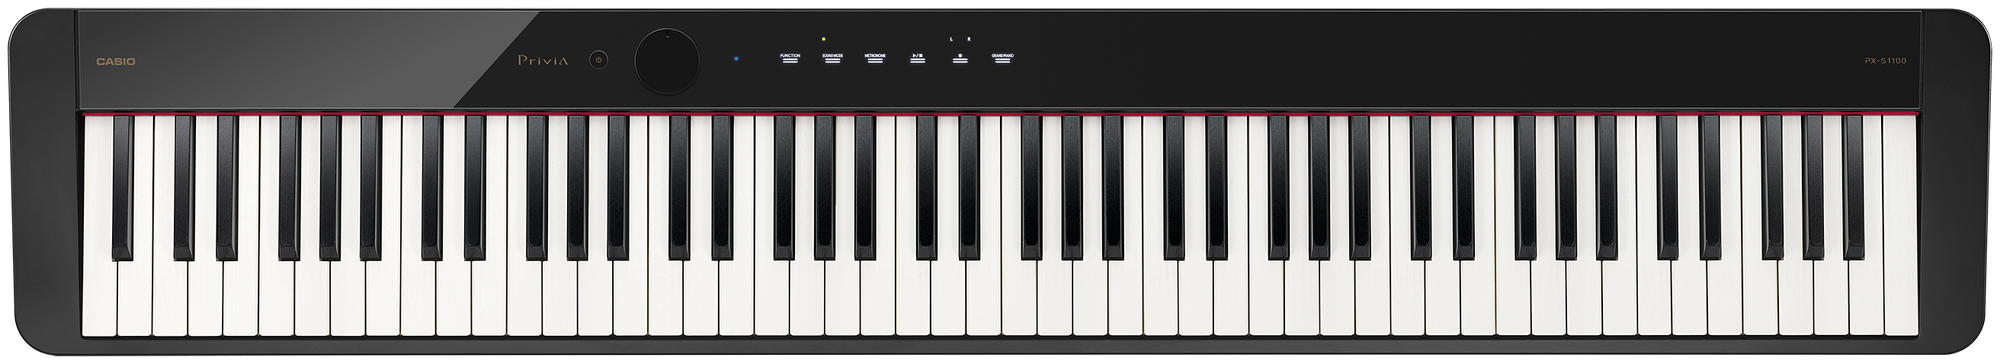 Цифровое пианино CASIO PX-S1100, EU